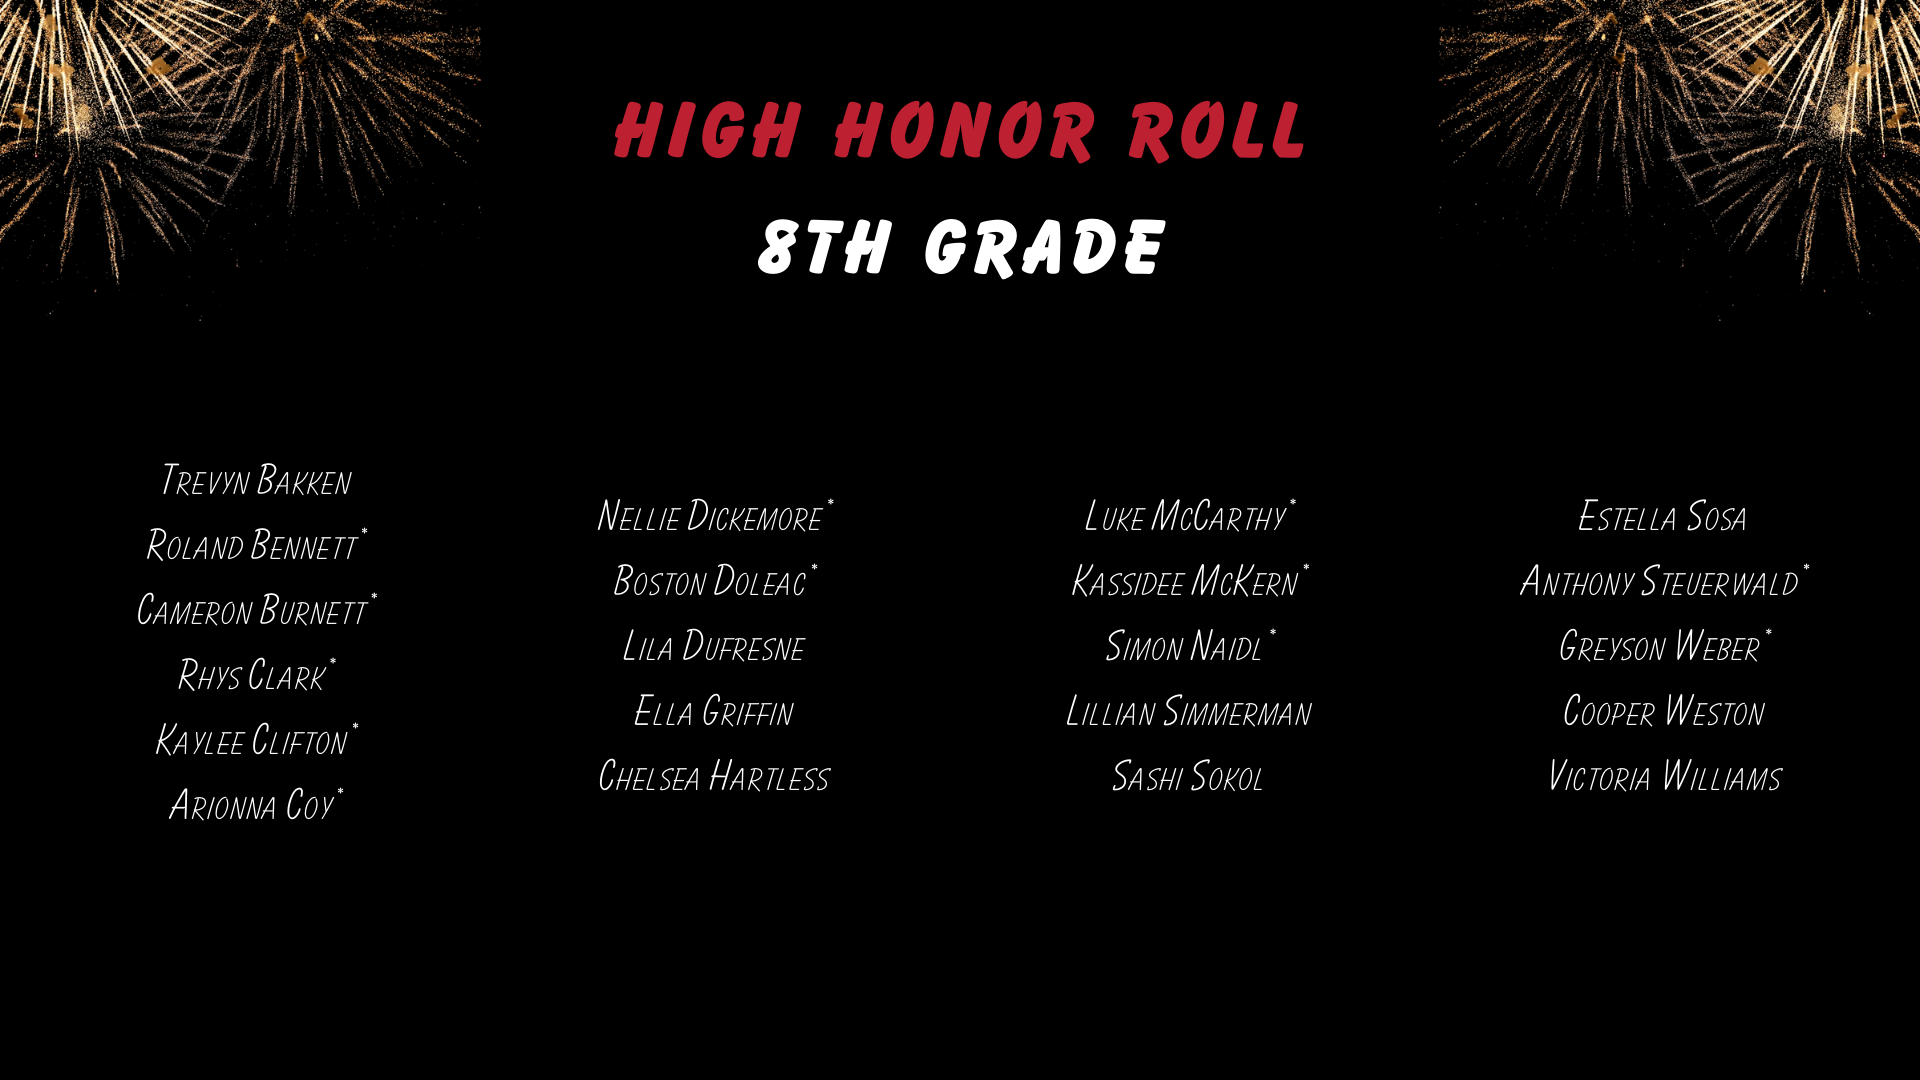 High Honor Roll 8th grade